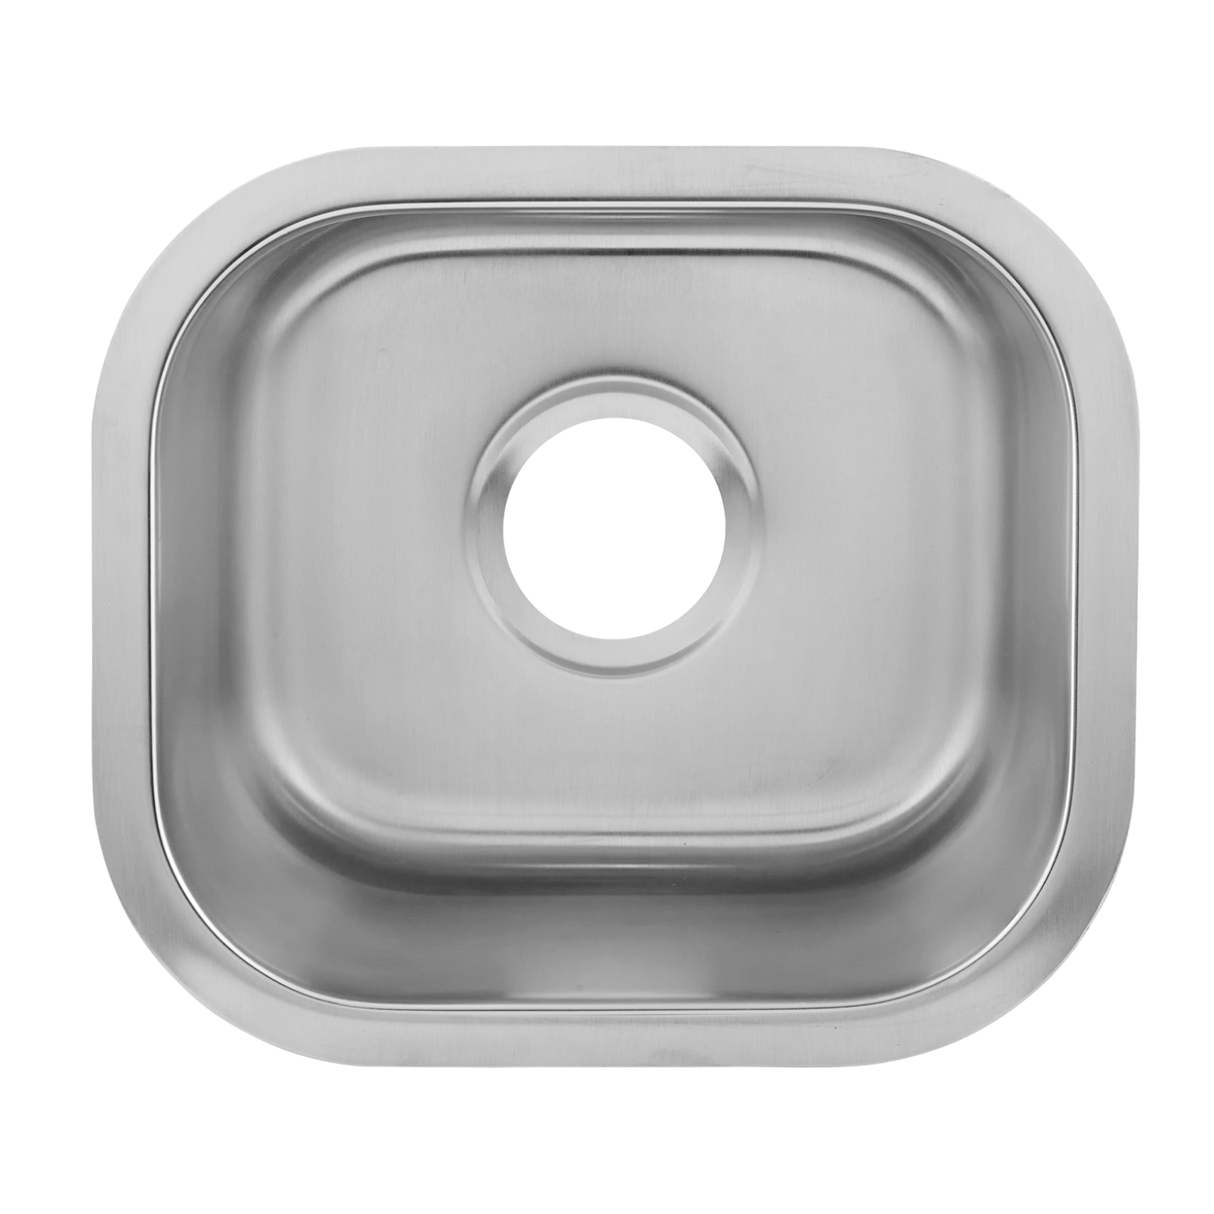 DAX Stainless Steel Single Bowl Undermount Kitchen Sink, Brushed Stainless Steel DAX-1214